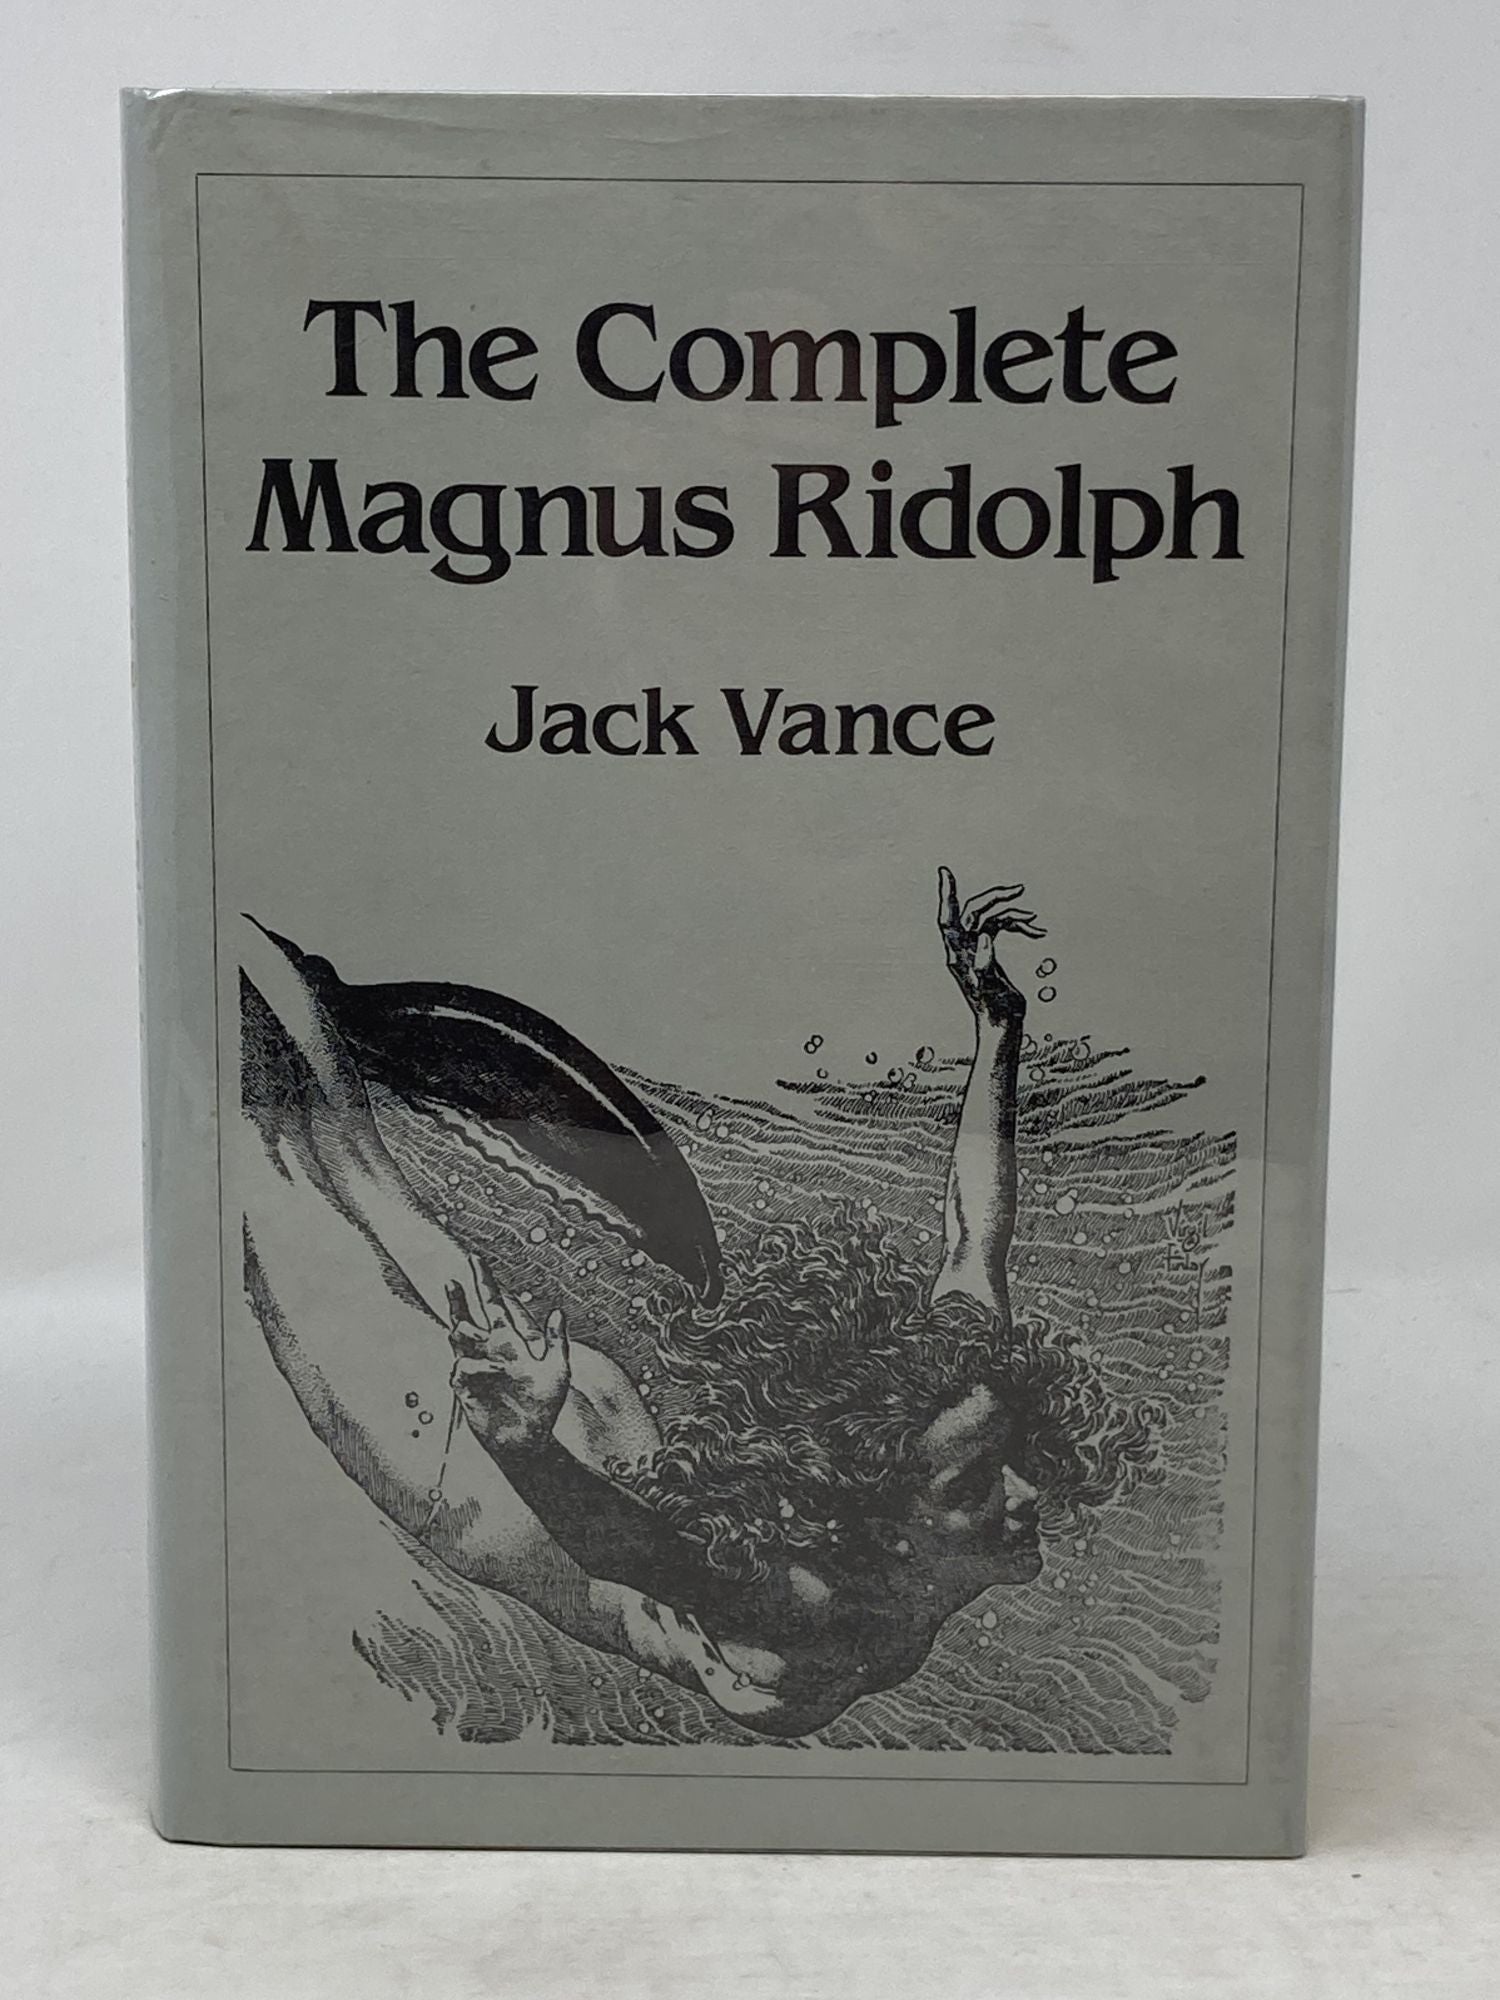 Vance, Jack - The Complete Magnus Ridolph